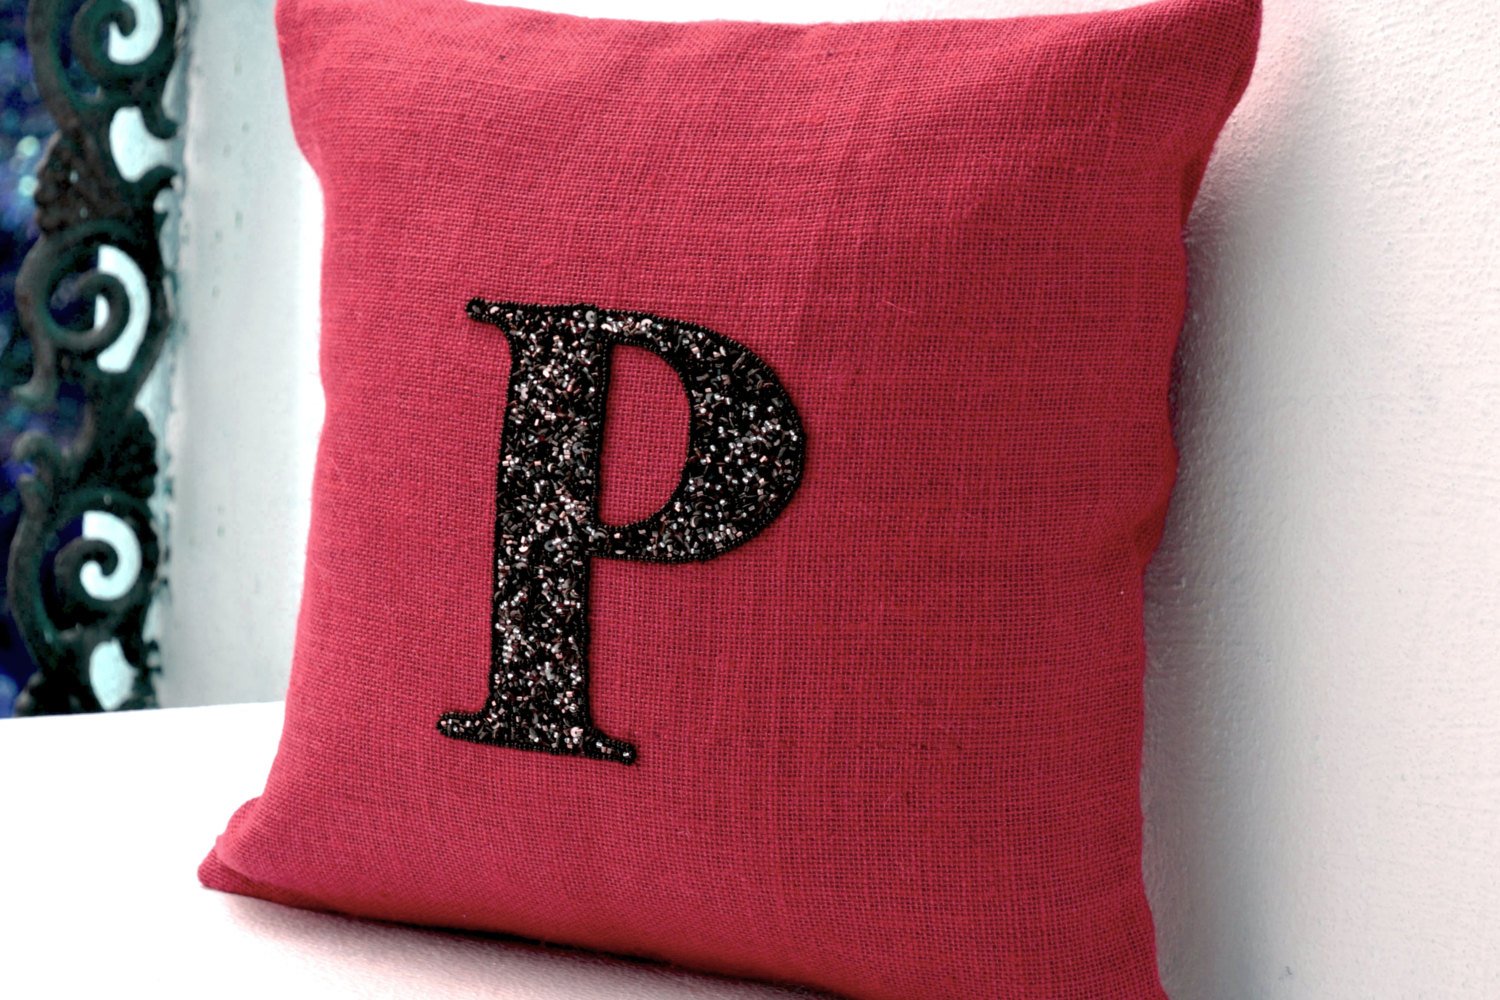 Amore Beaute Customized Sequin Monogram throw pillow, Sequin Throw pillows, Decorative pillow